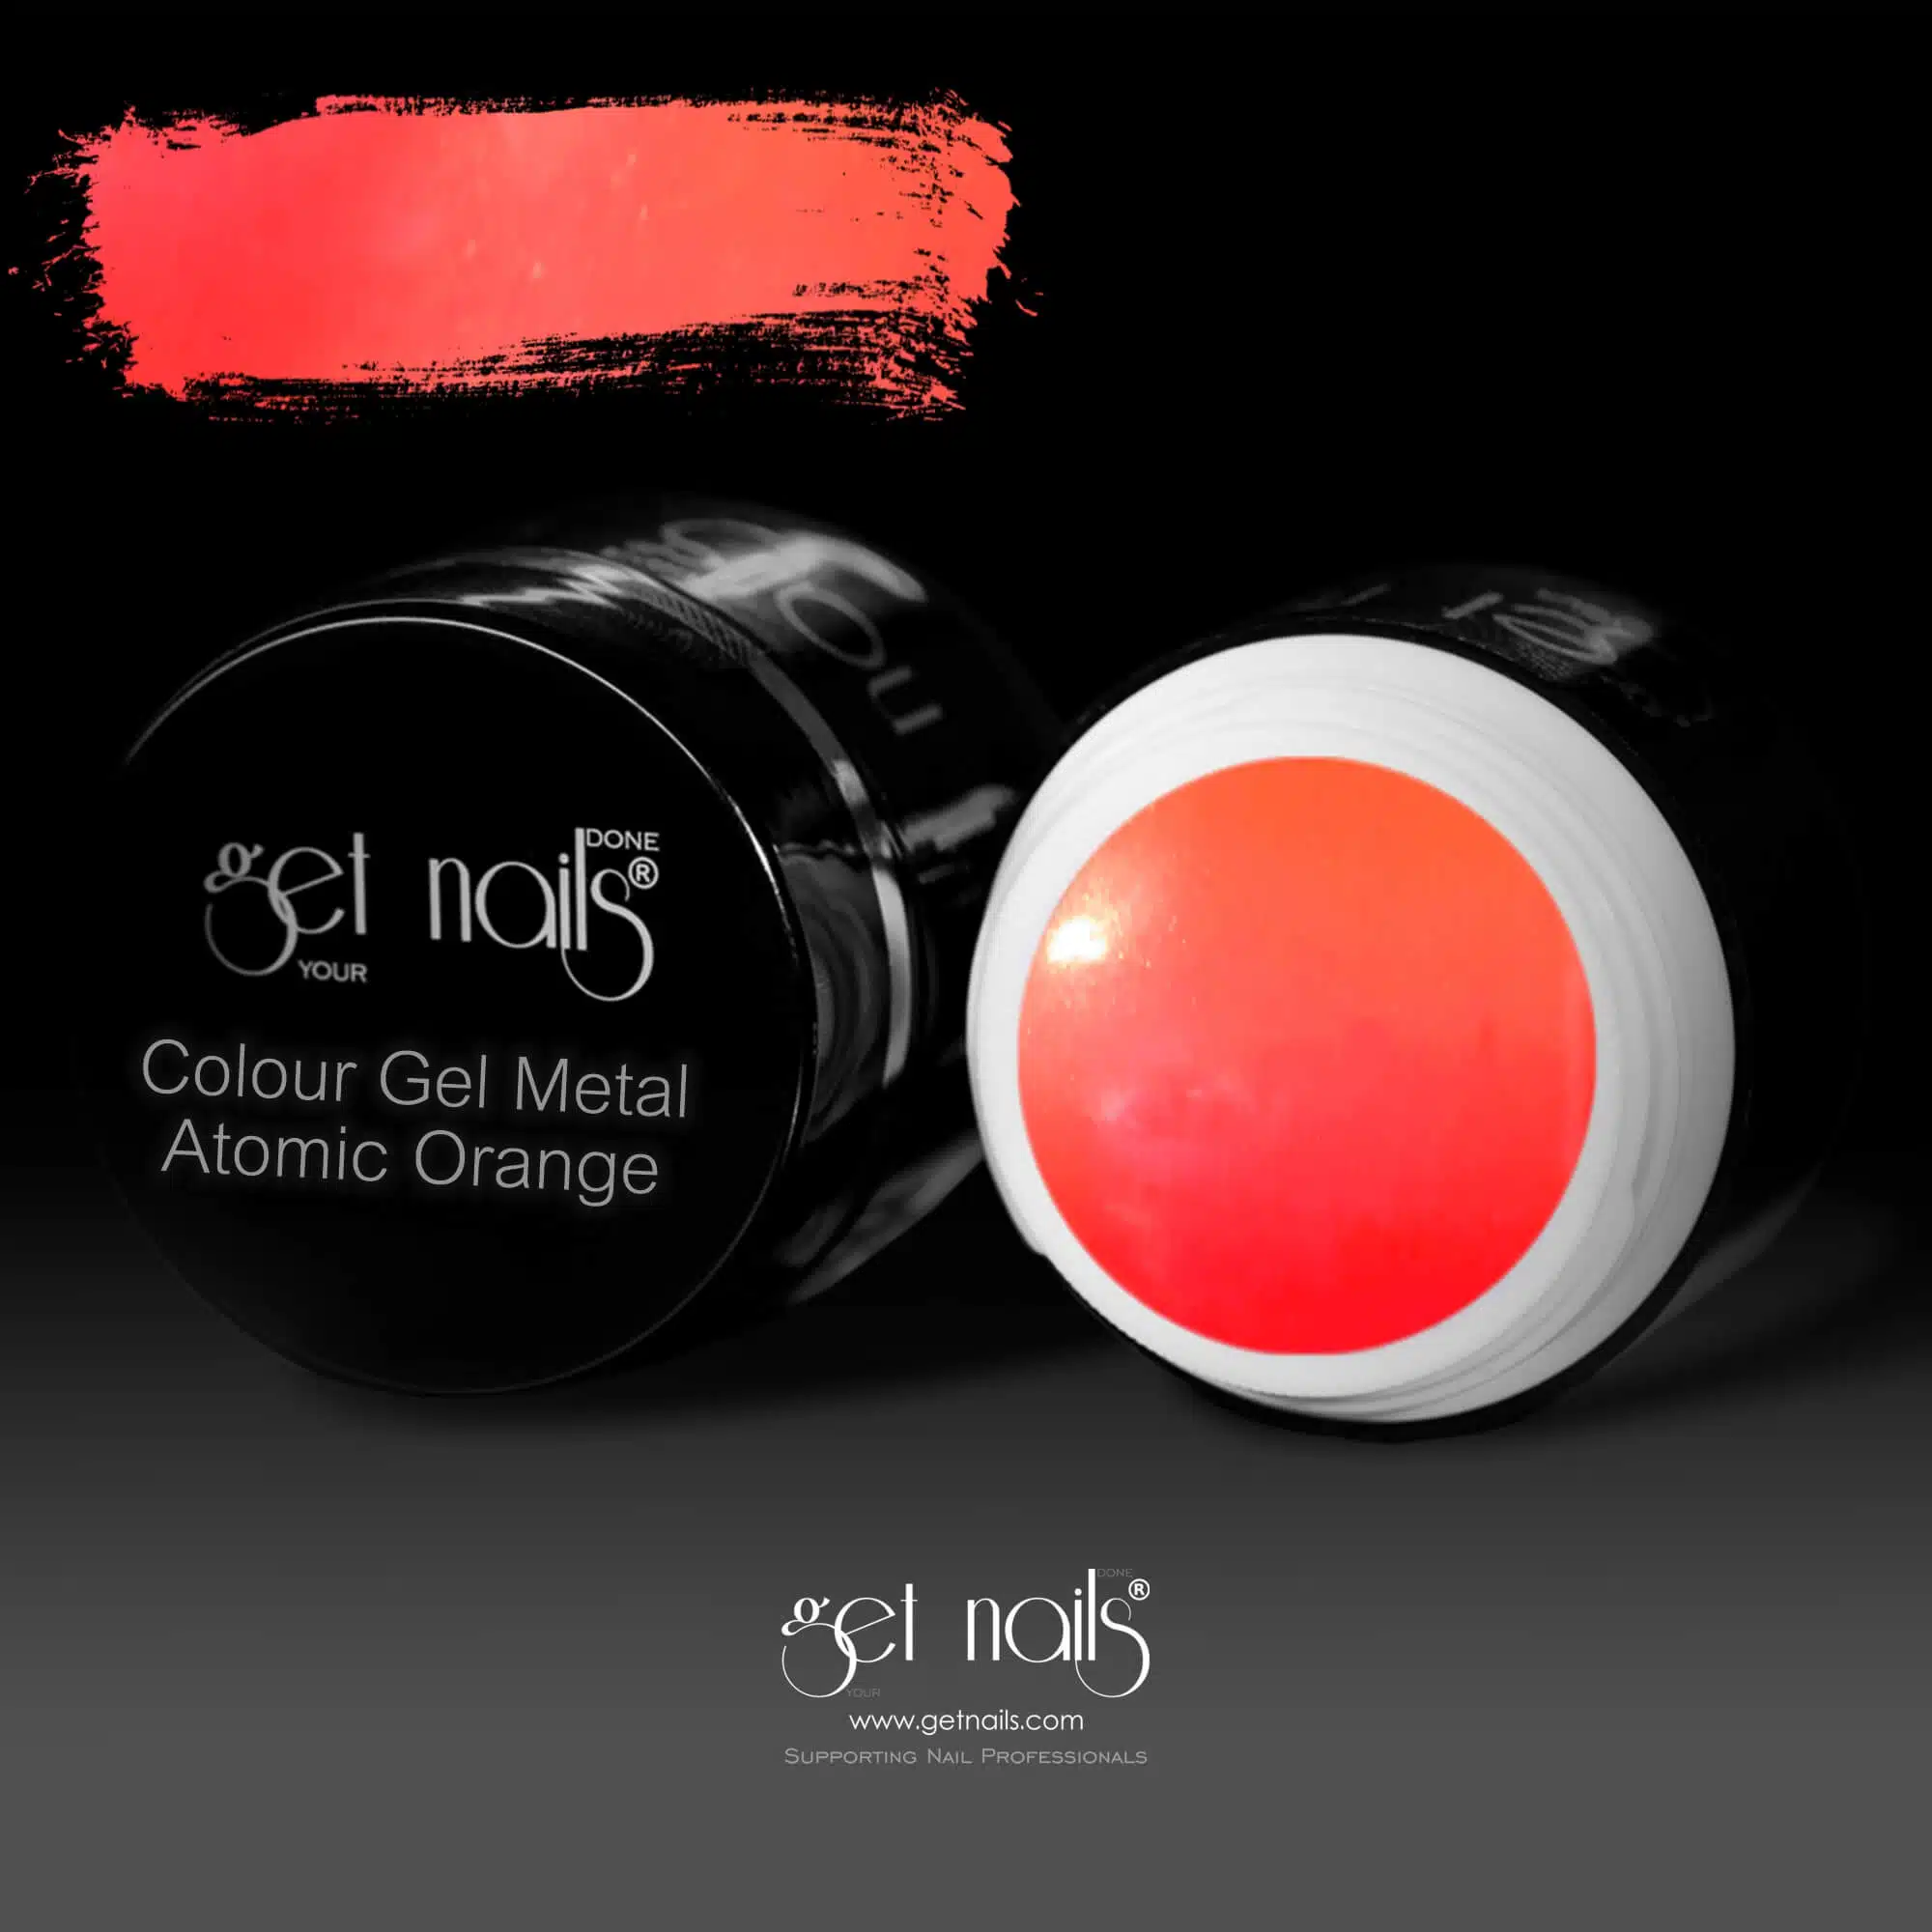 Get Nails Austria - Color Gel metal Atomic Orange 5g